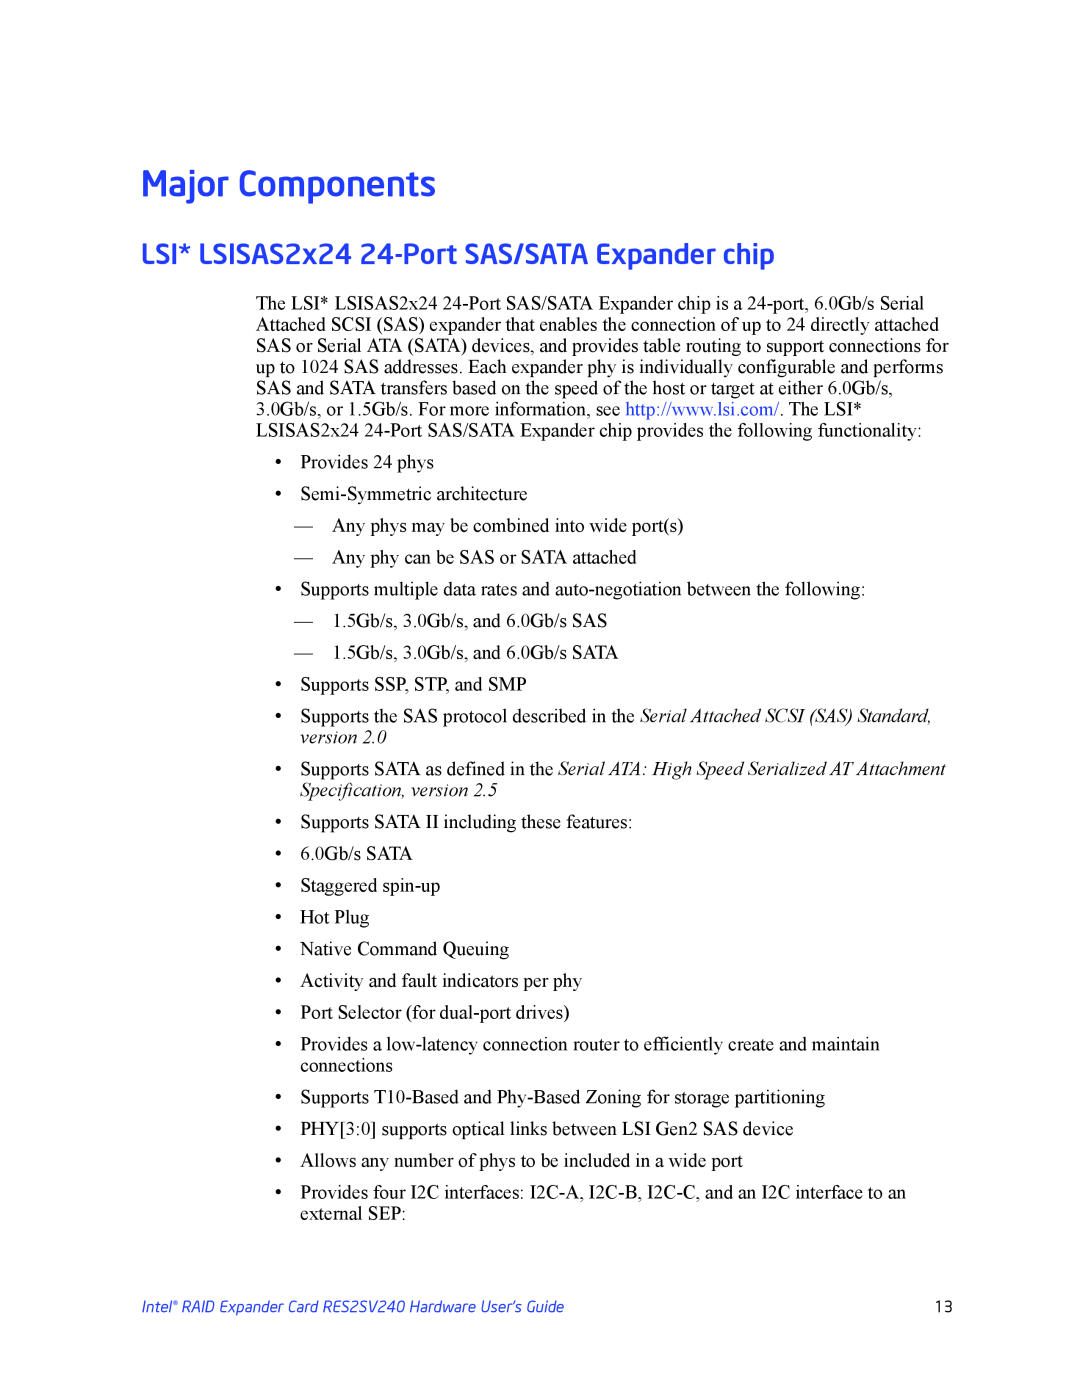 Intel RES2SV240 manual Major Components, LSI* LSISAS2x24 24-PortSAS/SATA Expander chip 